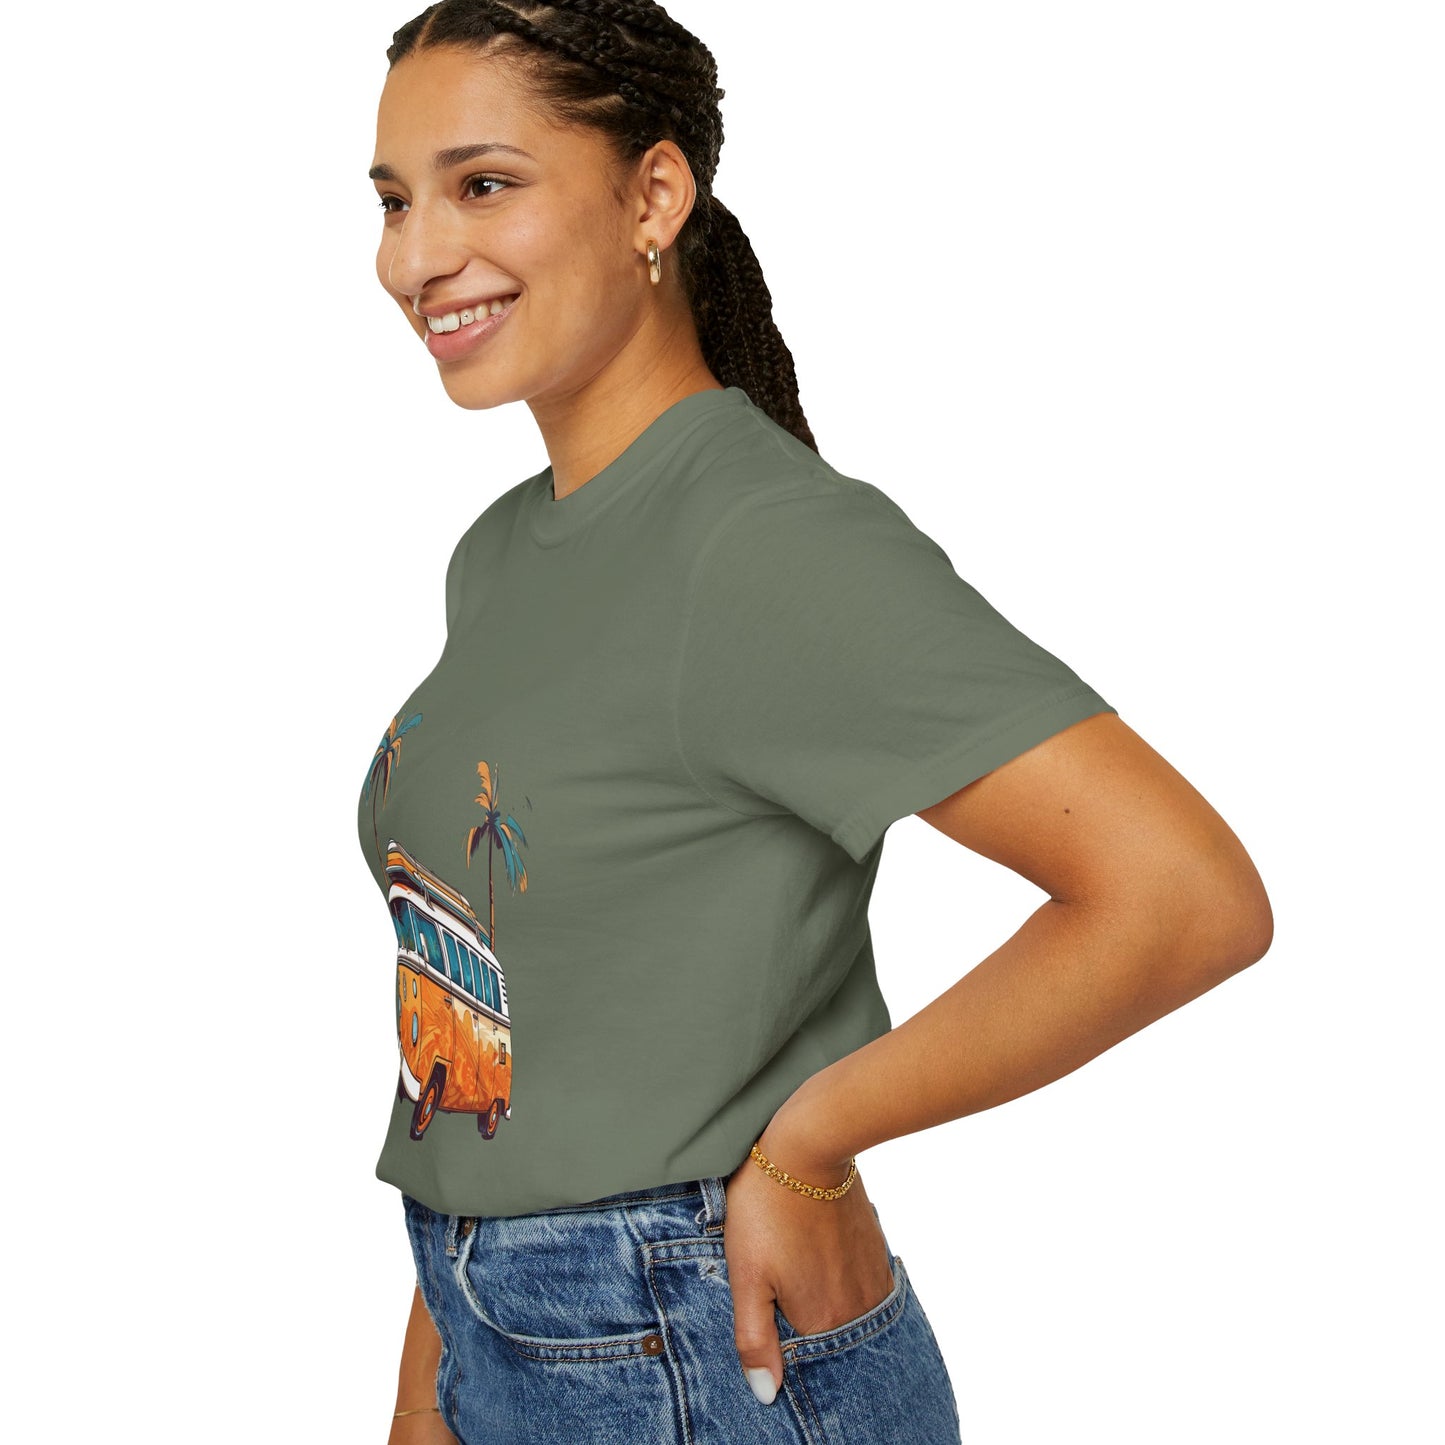 Retro Surf Van: Unisex Garment-Dyed T-shirt